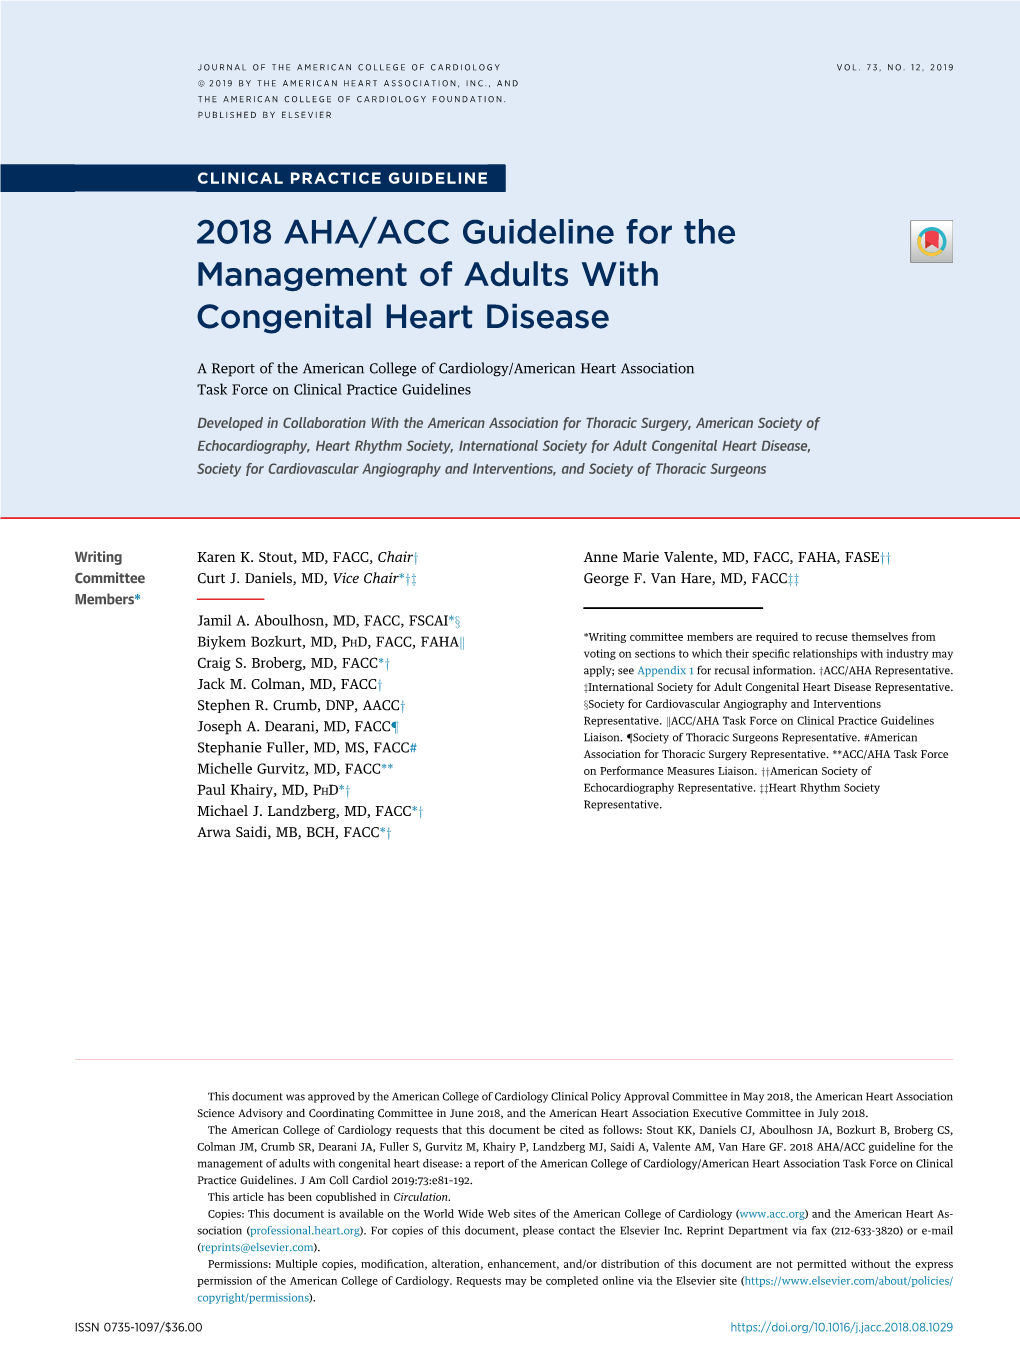 2018 AHA-ACC Guideline Management Adults Congenital